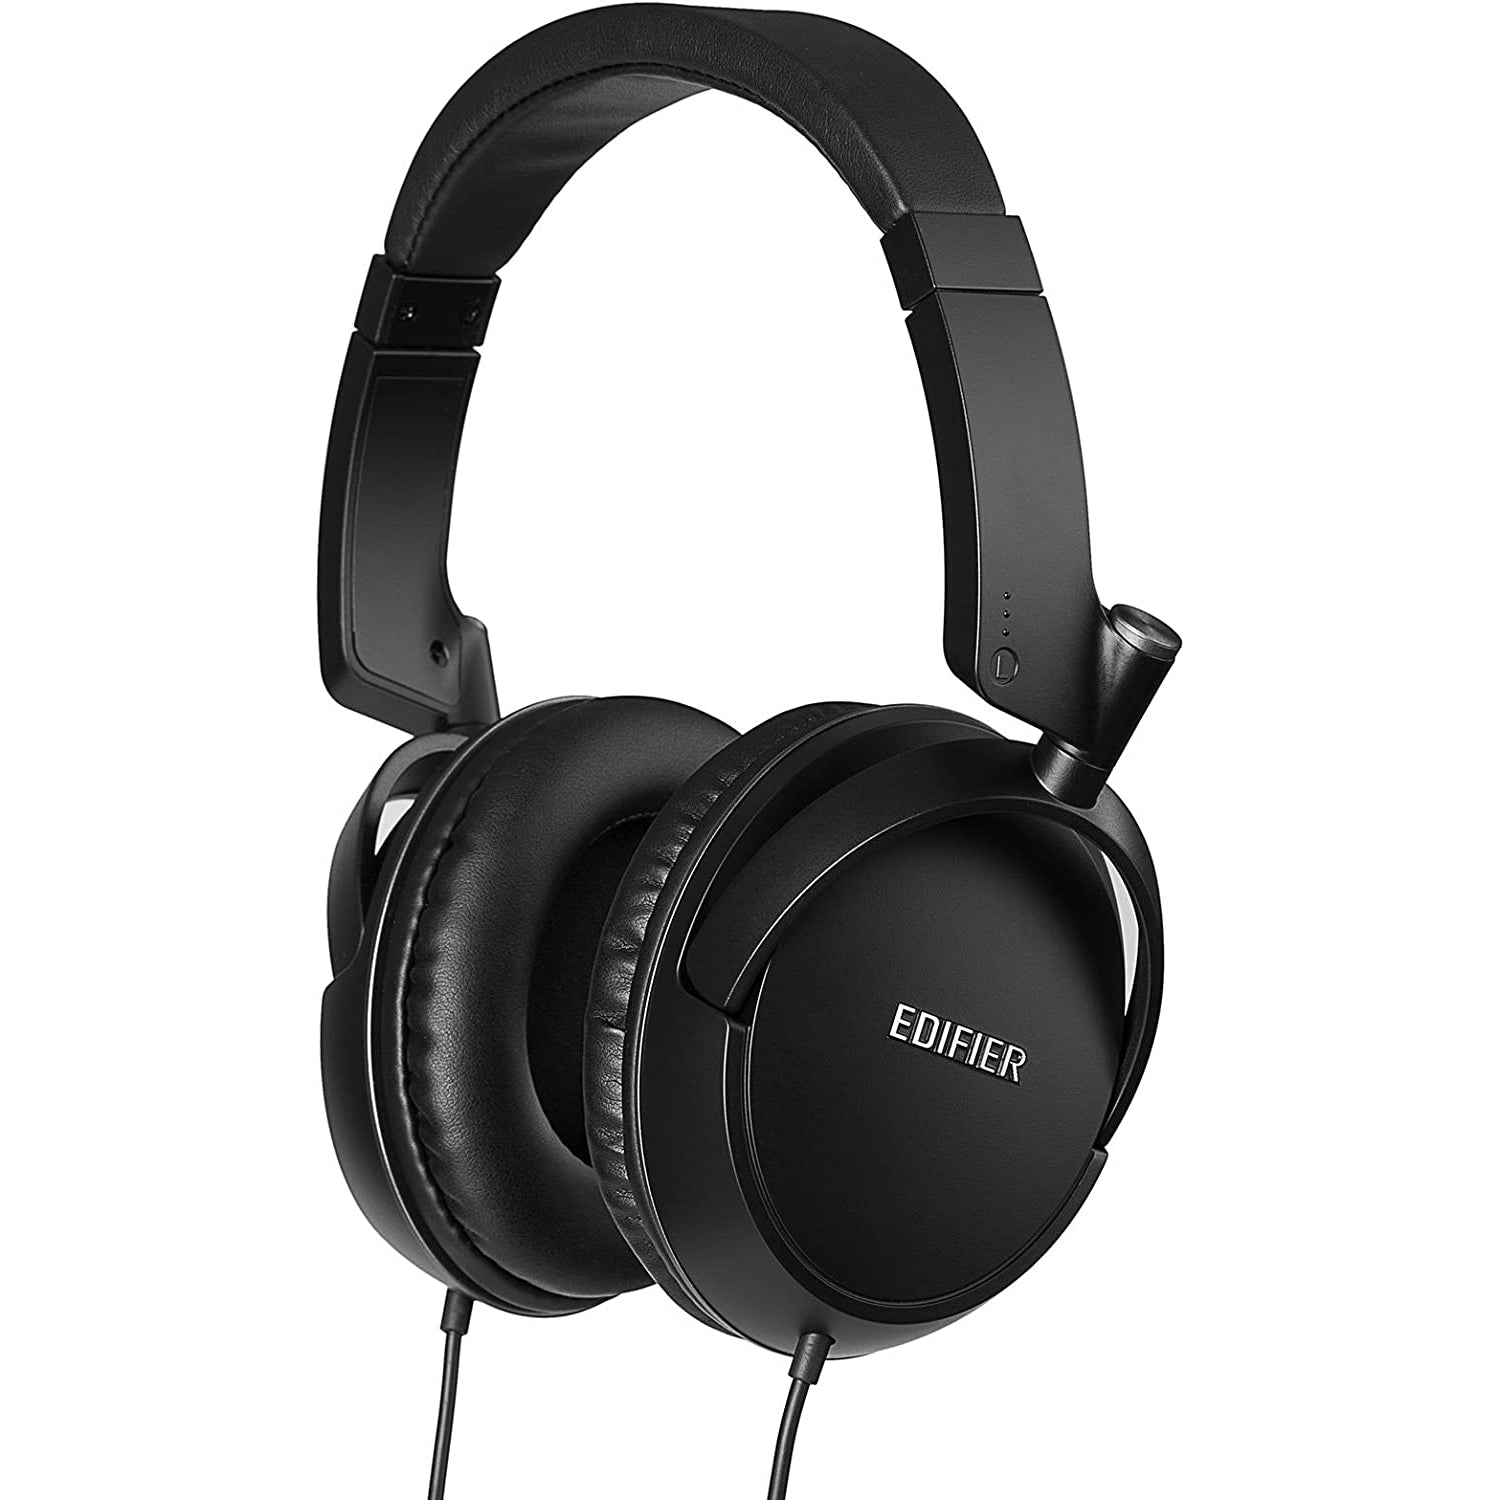 Edifier P841 Premium Hi-Fi Over-Ear Stereo Headphones - Black